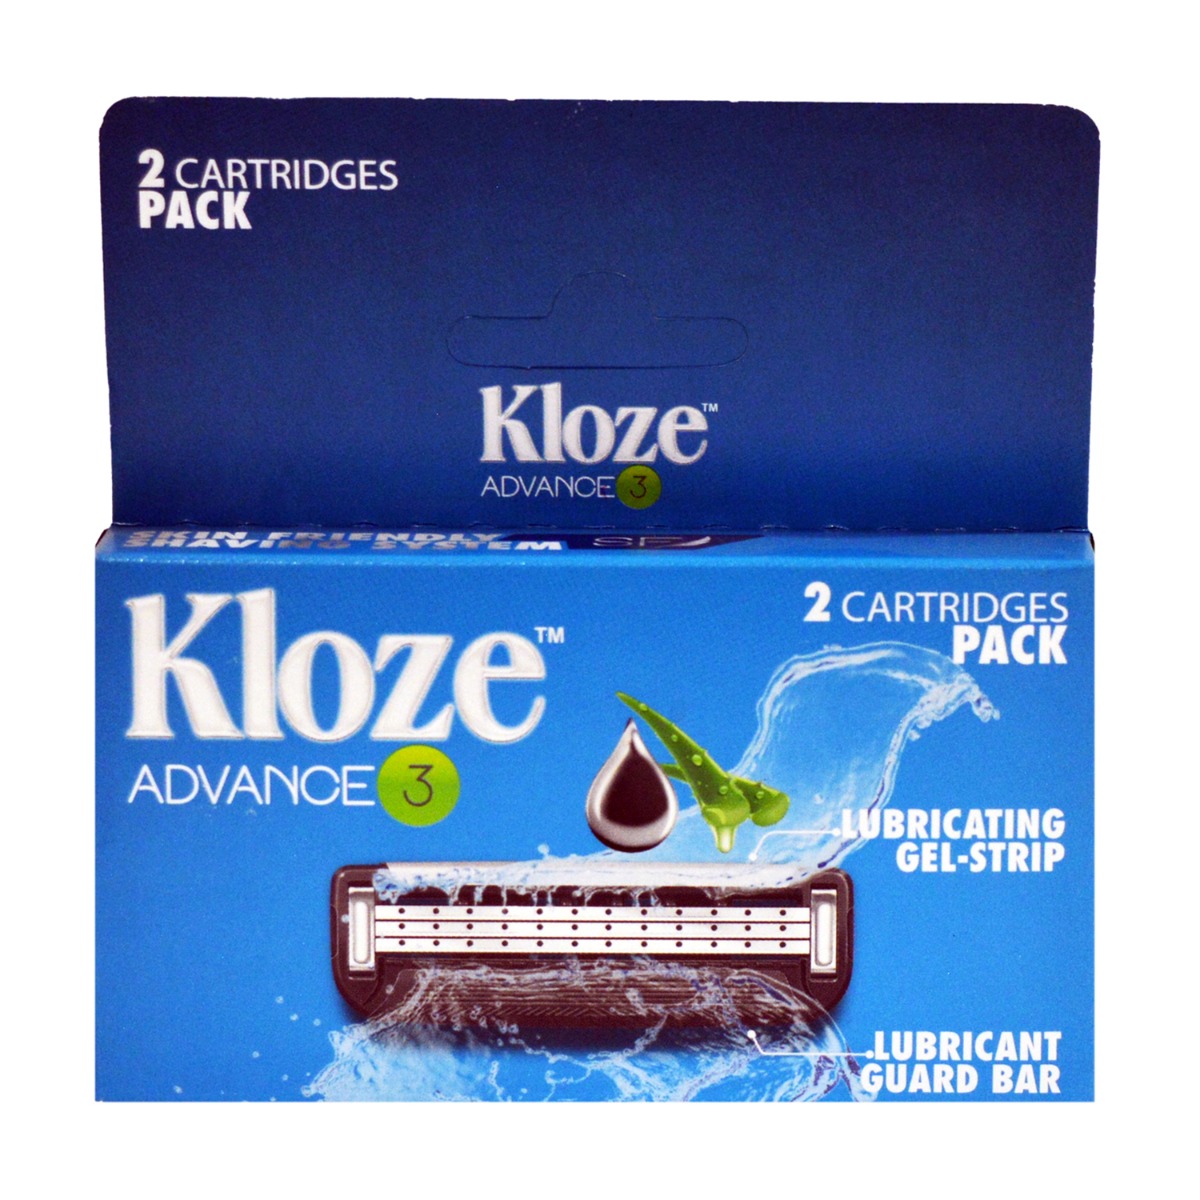 Kloze Advance 3, Shaving Razor for men with 3 Blades, 2 Cartridges